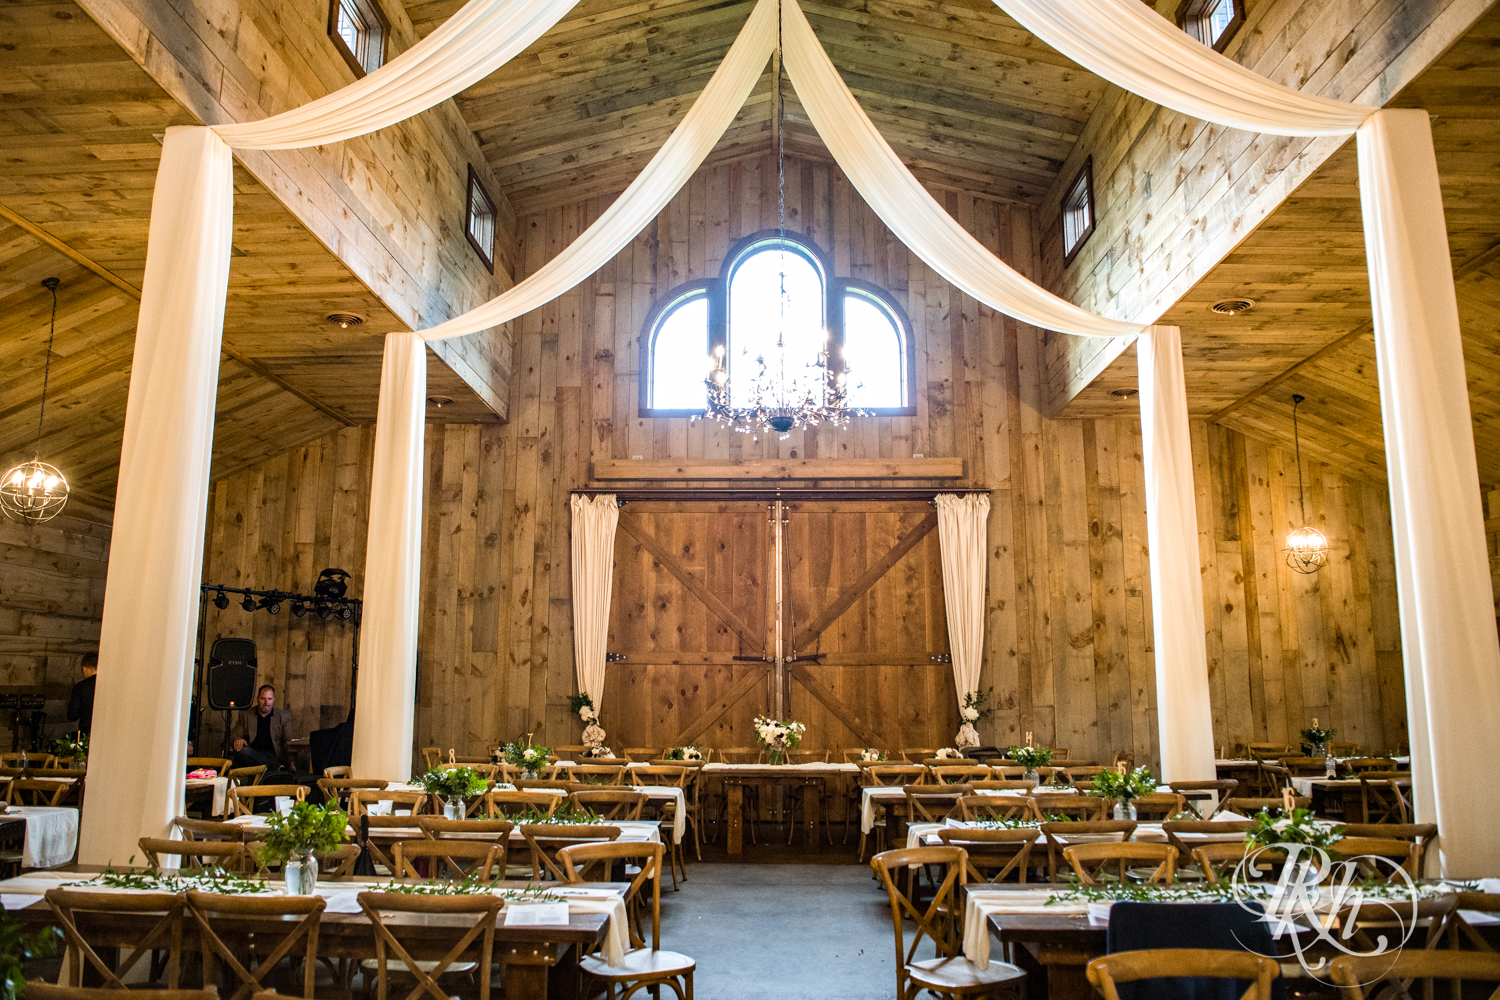 Indoor barn wedding reception setup at Creekside Farm Weddings and Events in Rush City, Minnesota.